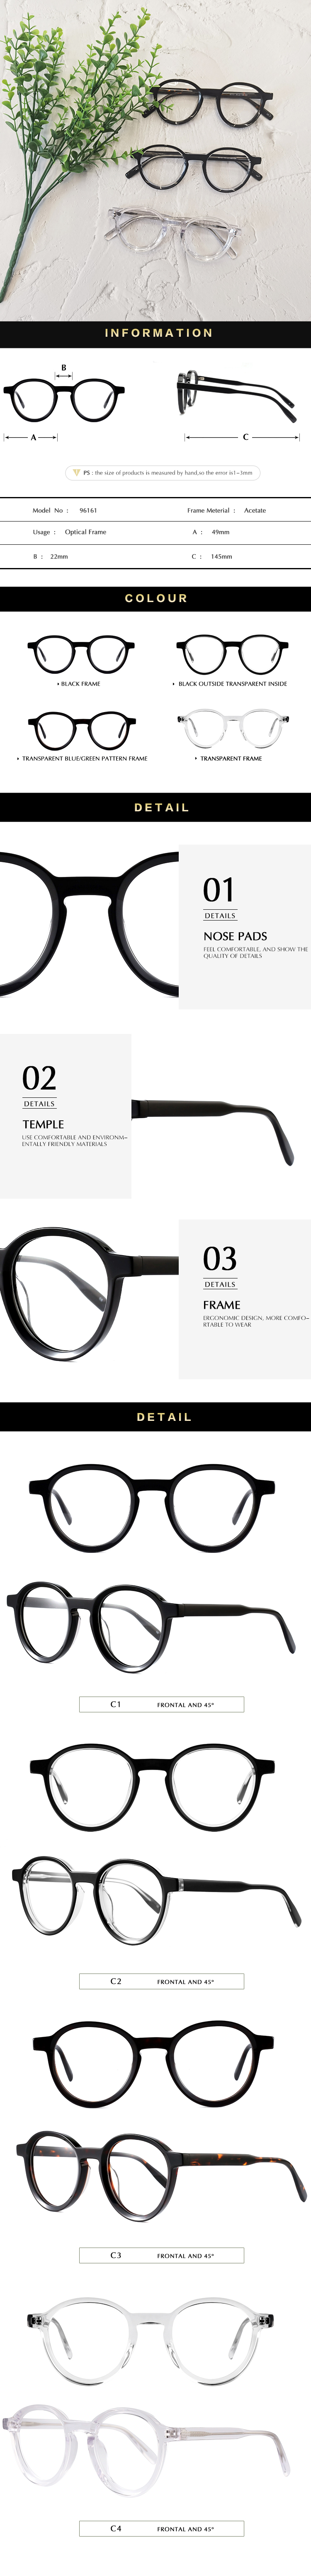 Unisex women acetate optical glasses frame